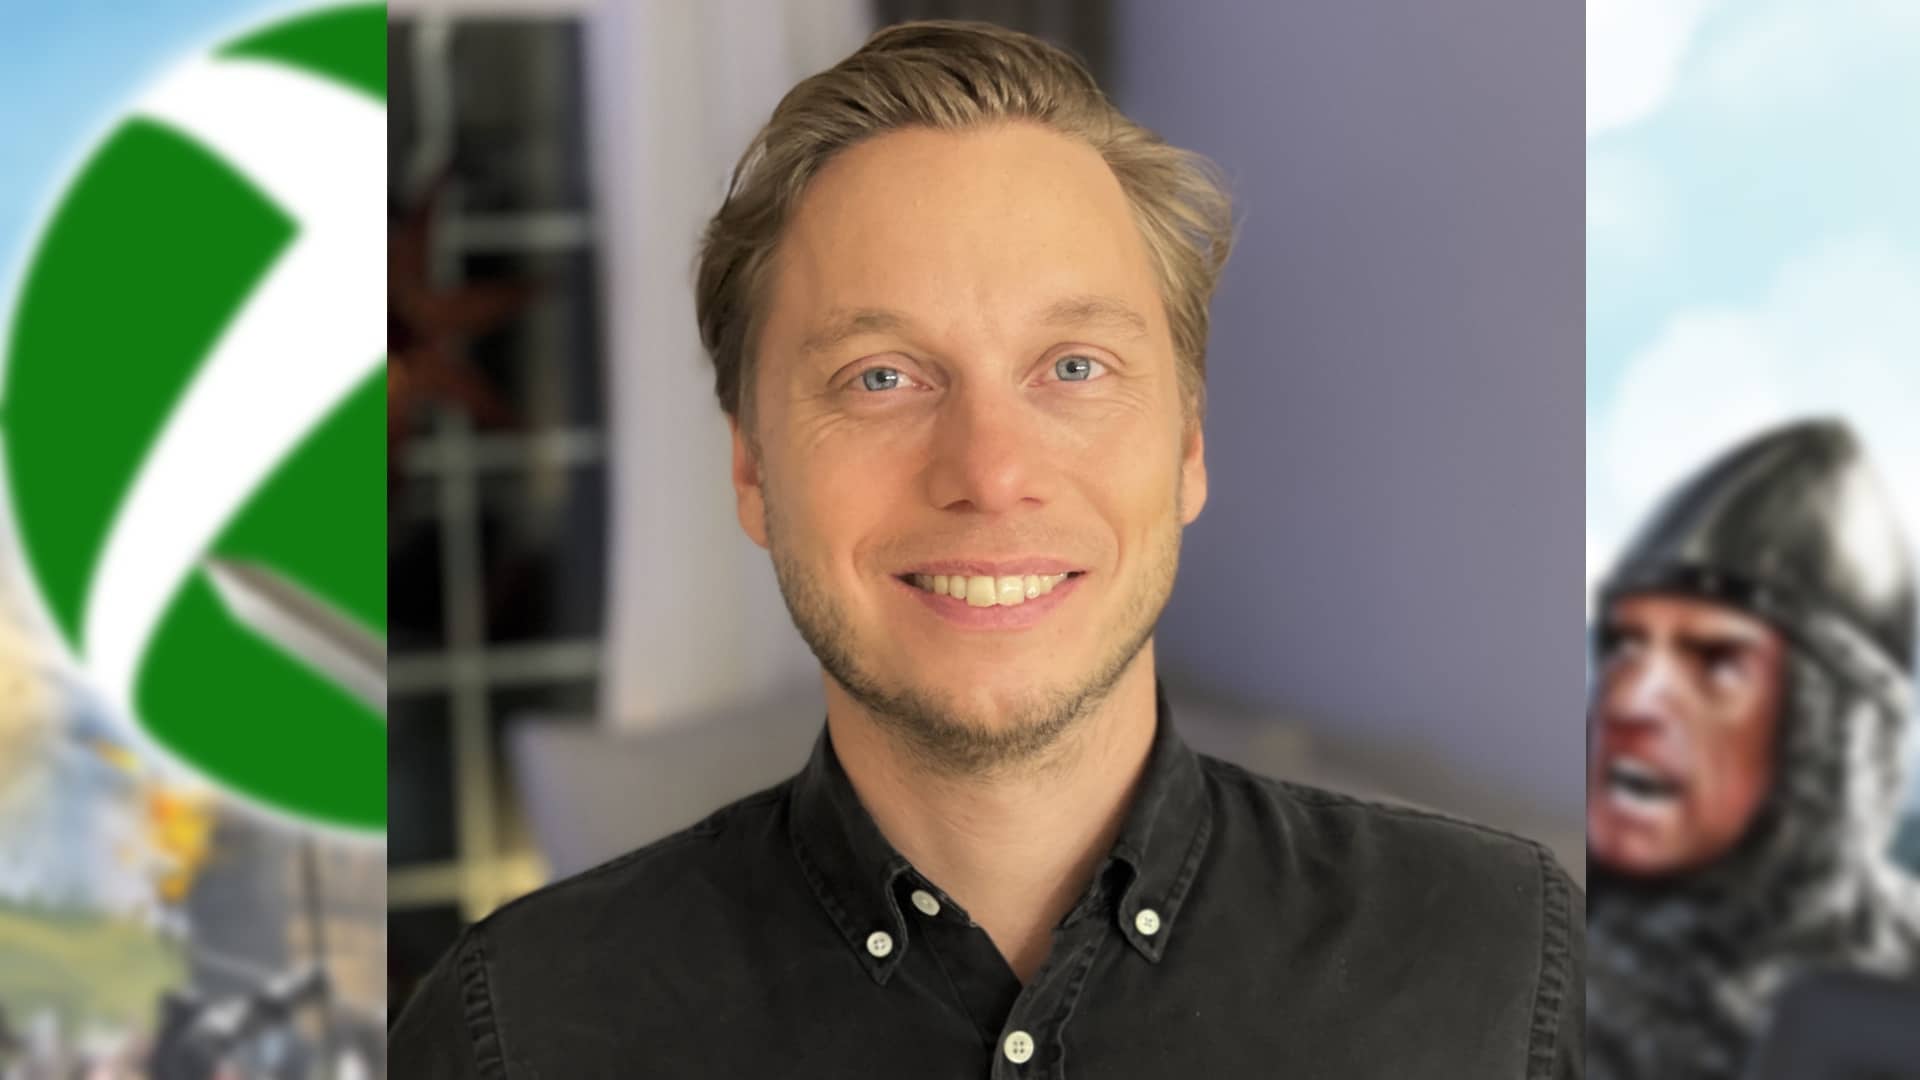 Johan Bolin是Paradox Interactive的首席营销官。